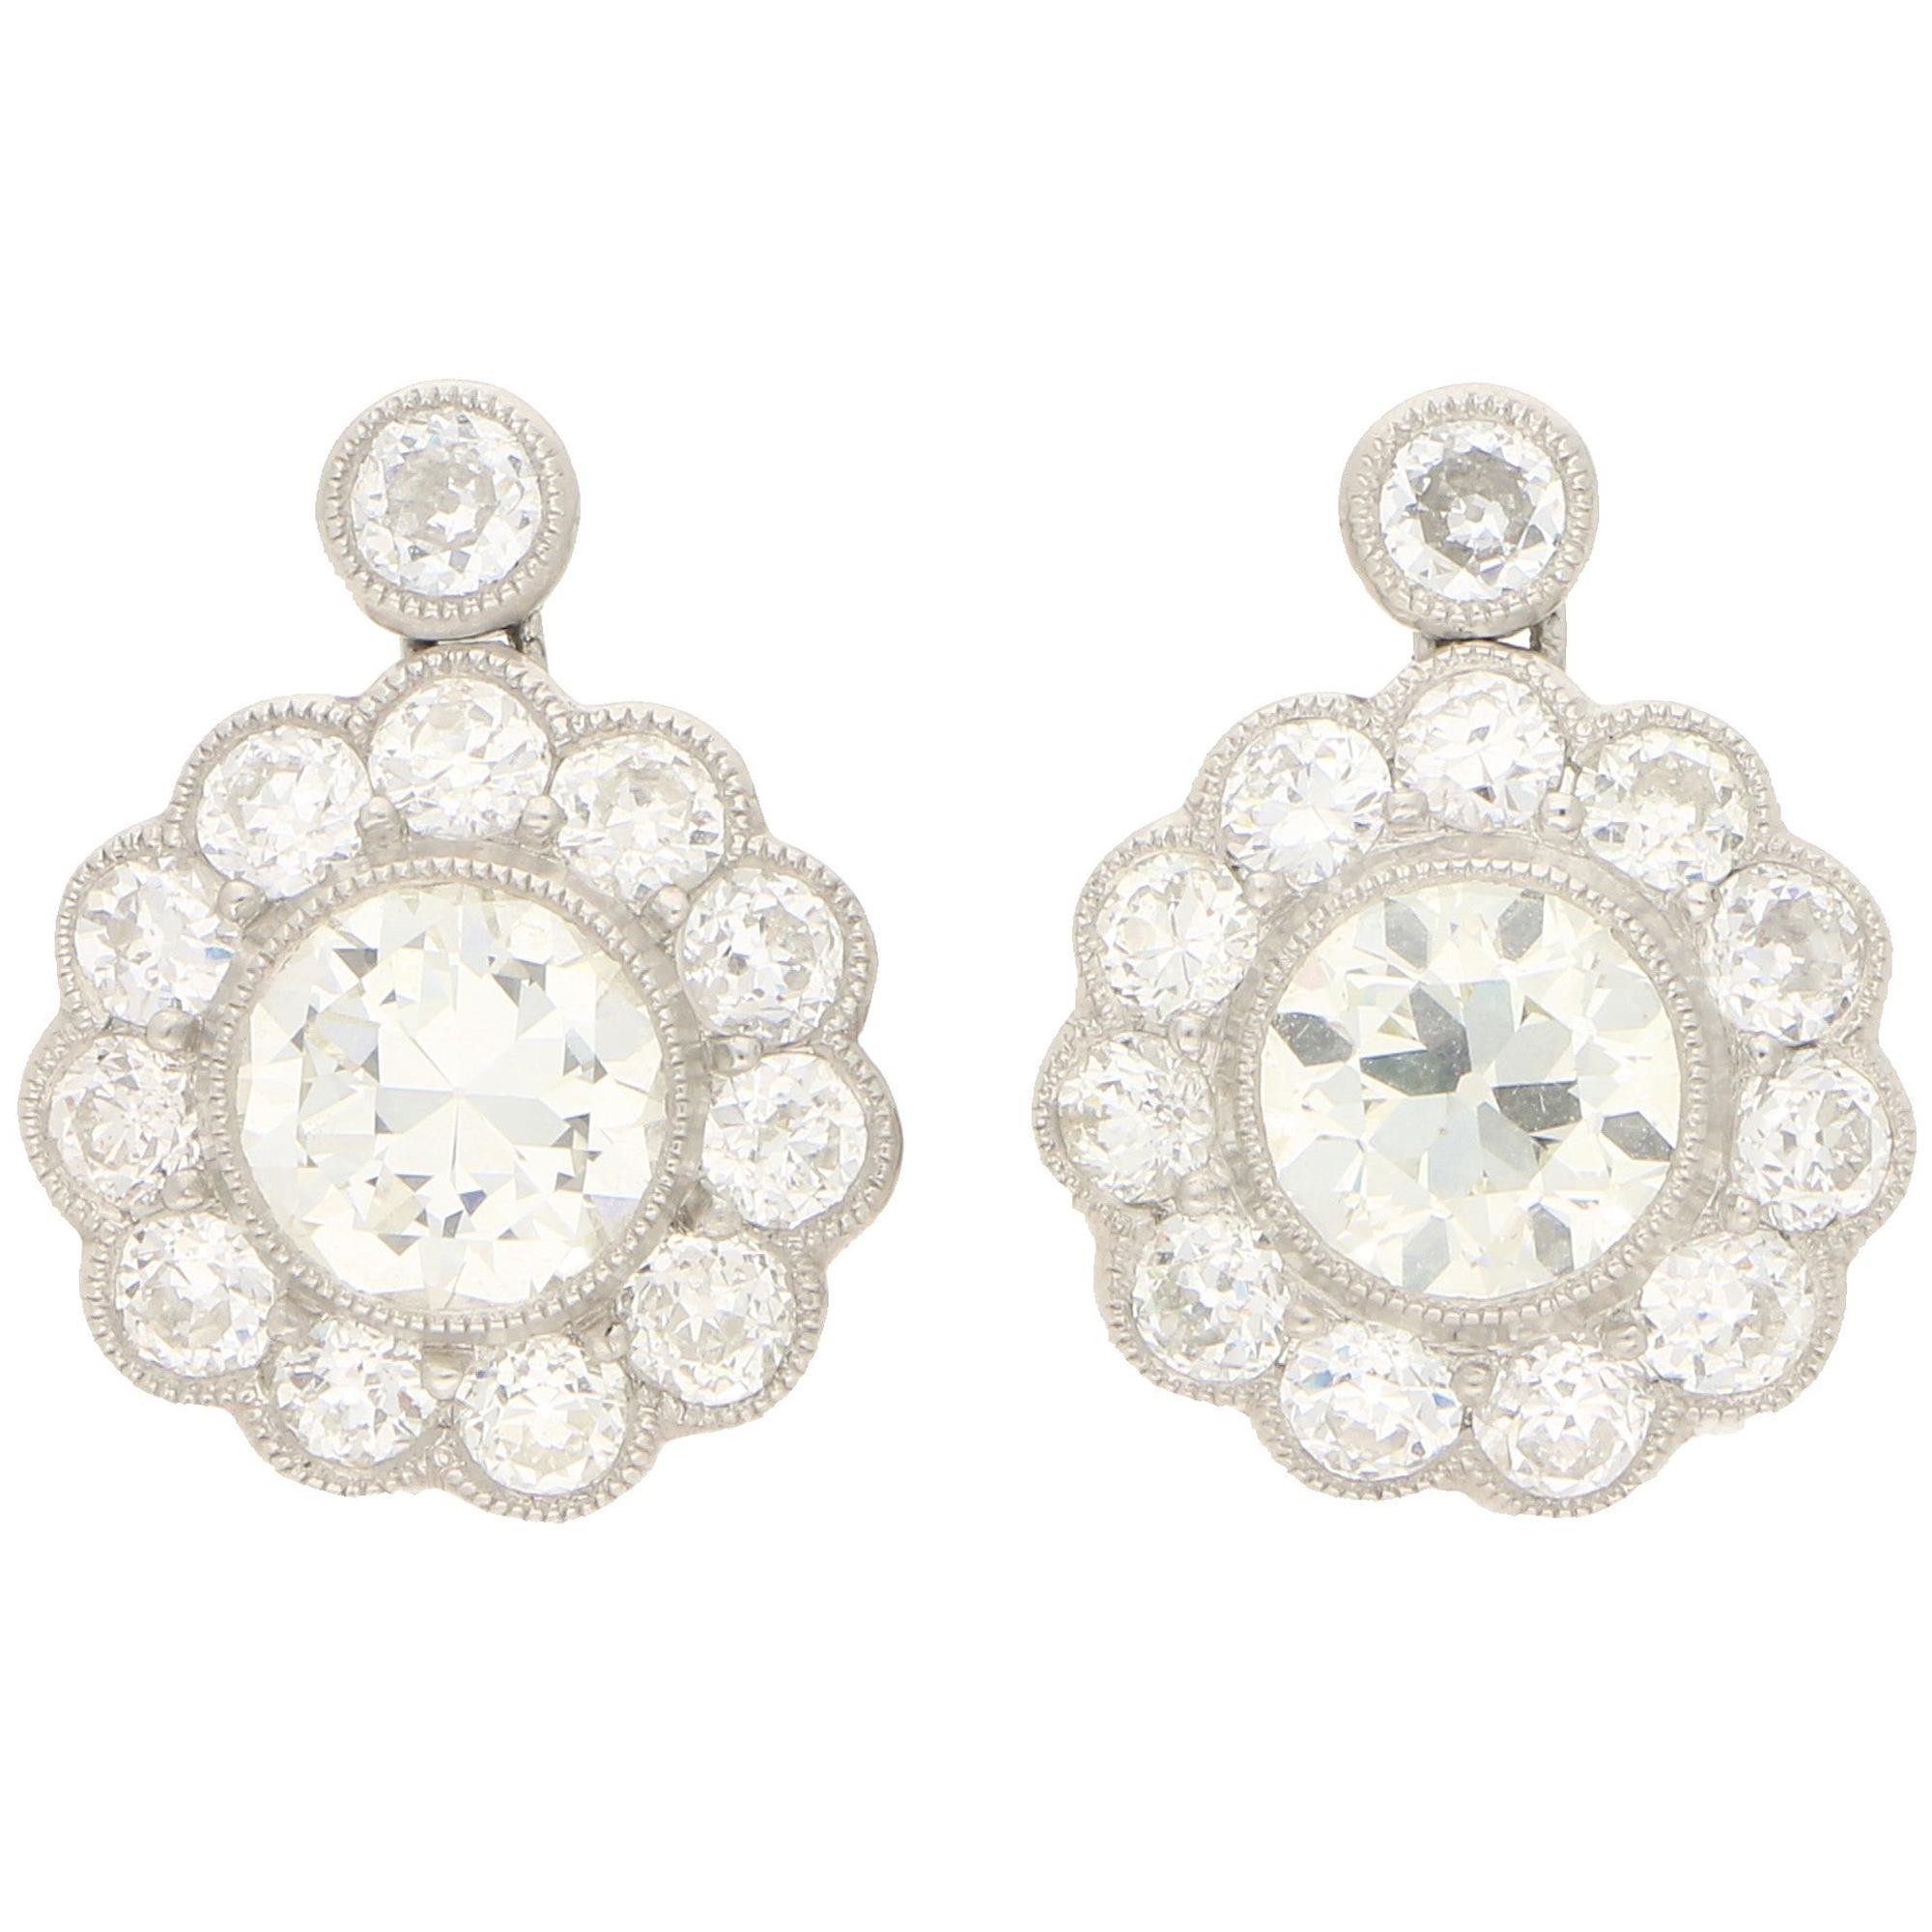 Art Deco Style Old European Cut Diamond Cluster Earrings Set in Platinum